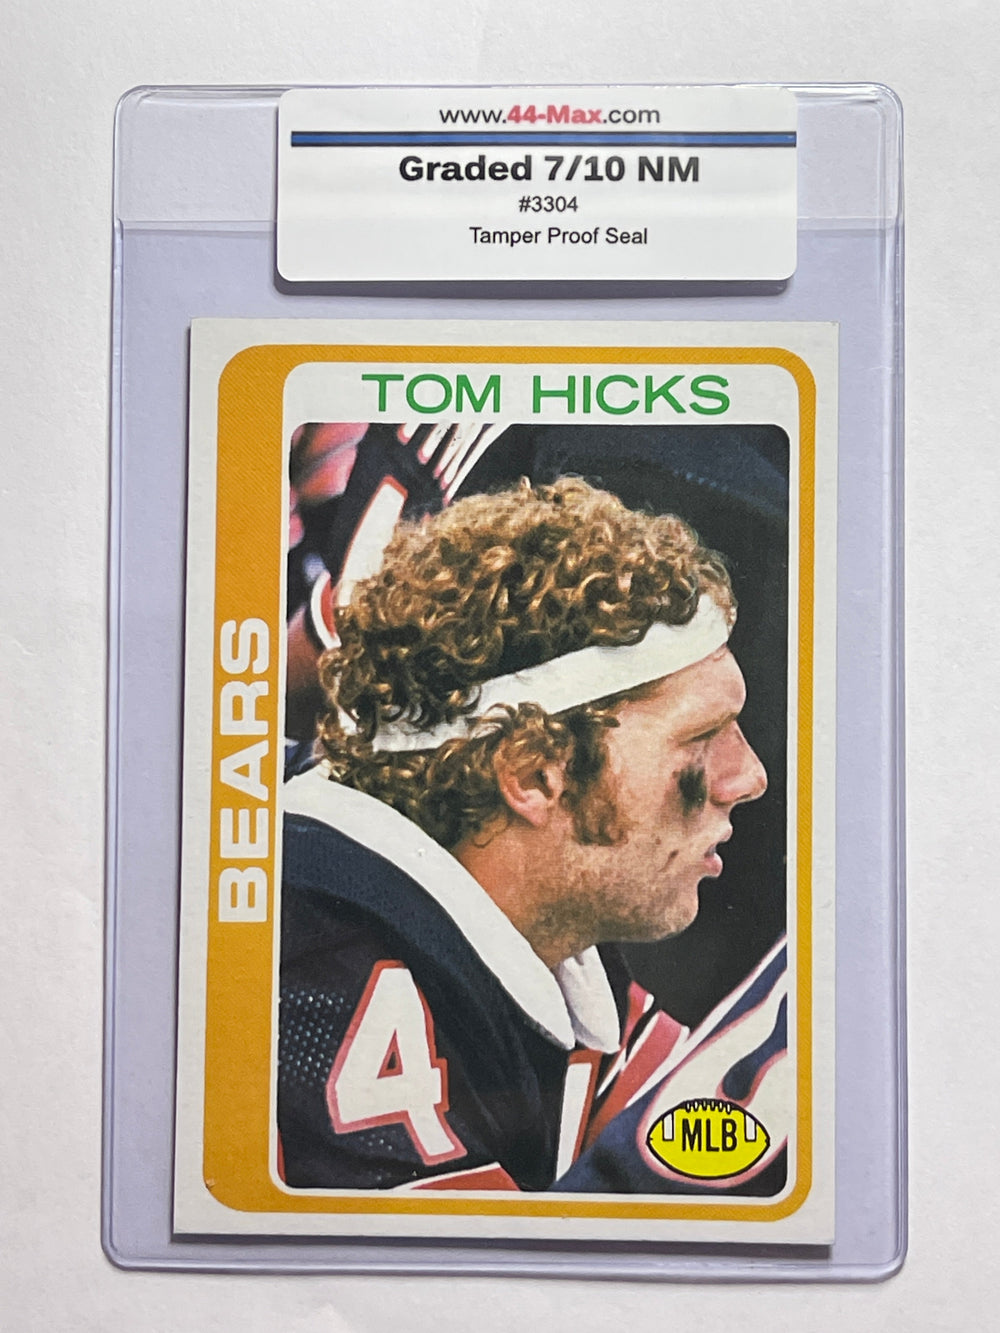 Tom Hicks 1978 Topps Football Card. 44-Max 7/10 NM #3304